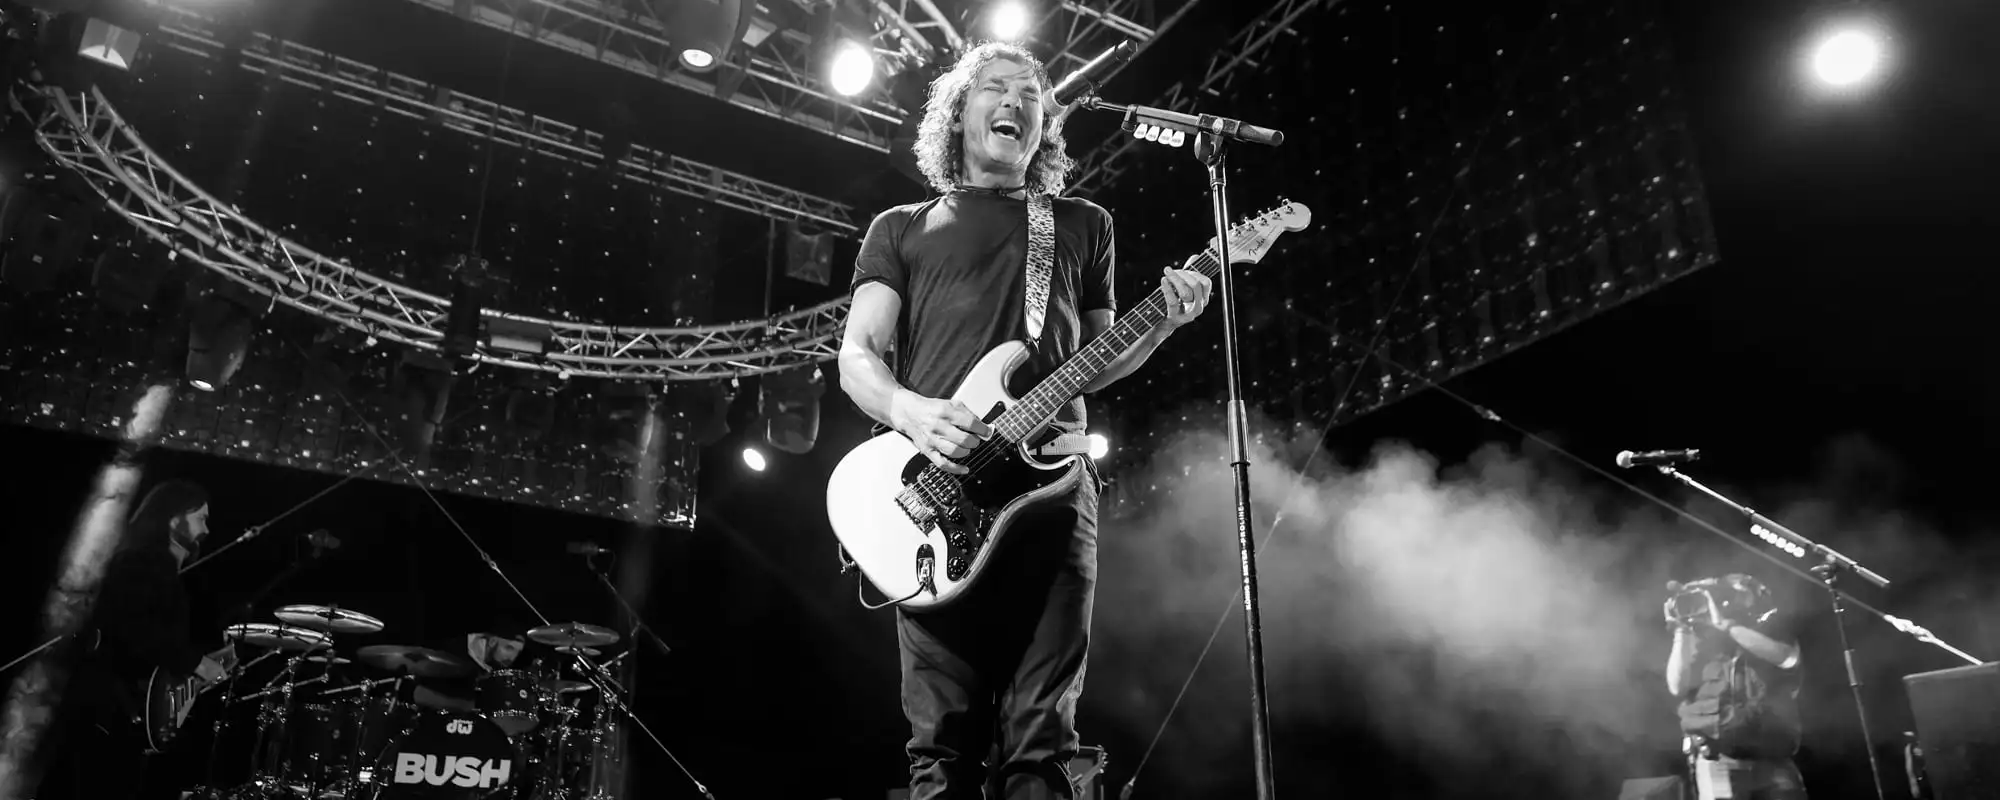 Bush, Stone Temple Pilots Announce Co-Headlining Tour Starting Sep. 30